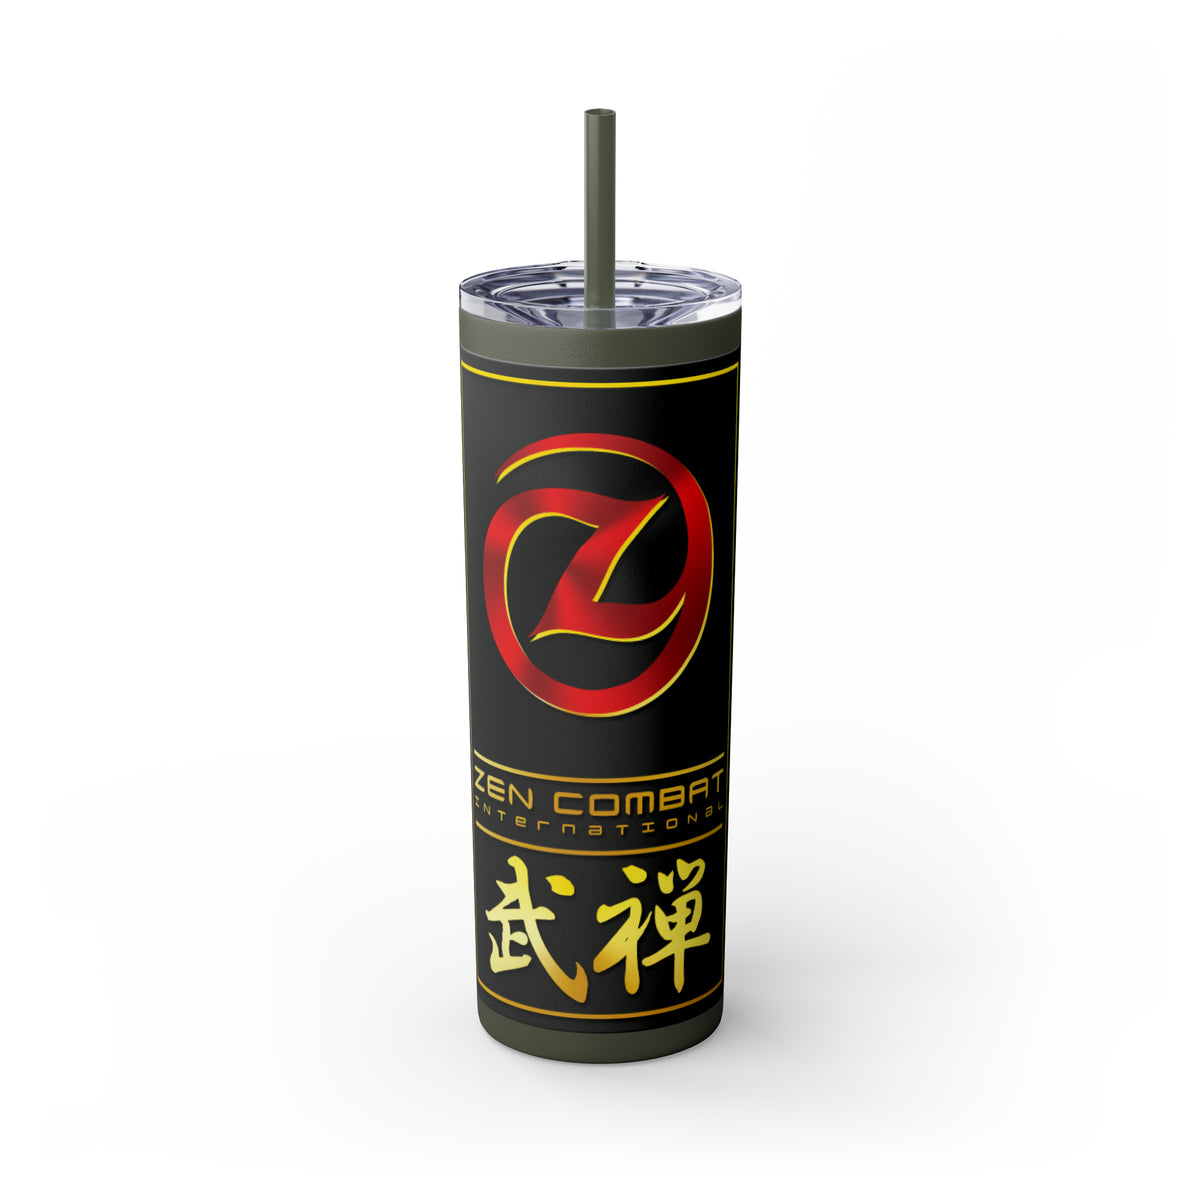 Zen Combat Gold Banner Skinny Tumbler with Straw, 20oz